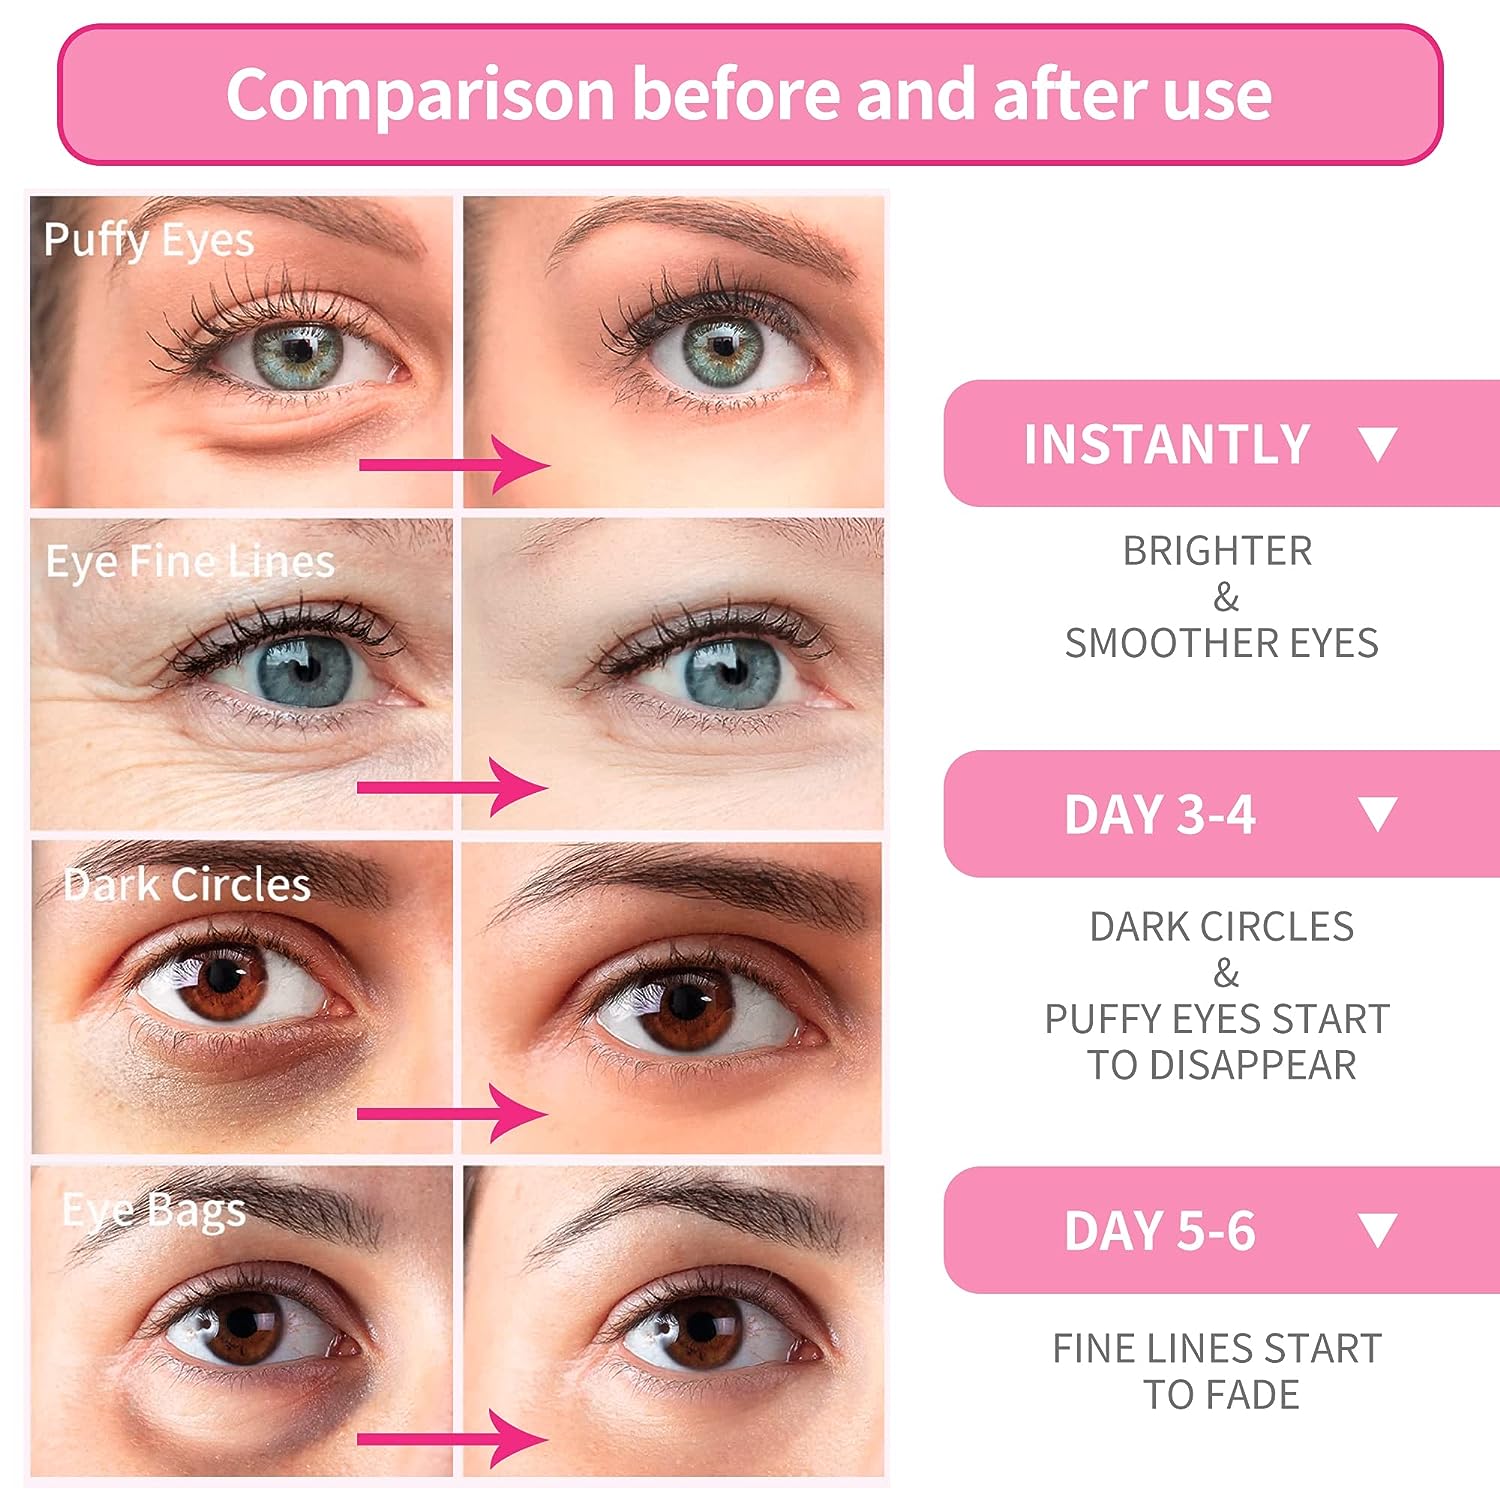 Rose Eye Mask– 60 Pcs - Eye Treatment Mask, under Eye Bags Treatment, under Eye Masks for Puffy Eyes, Anti-Aging,Anti-Wrinkle and Fine Lines, under Eye Dark Circles